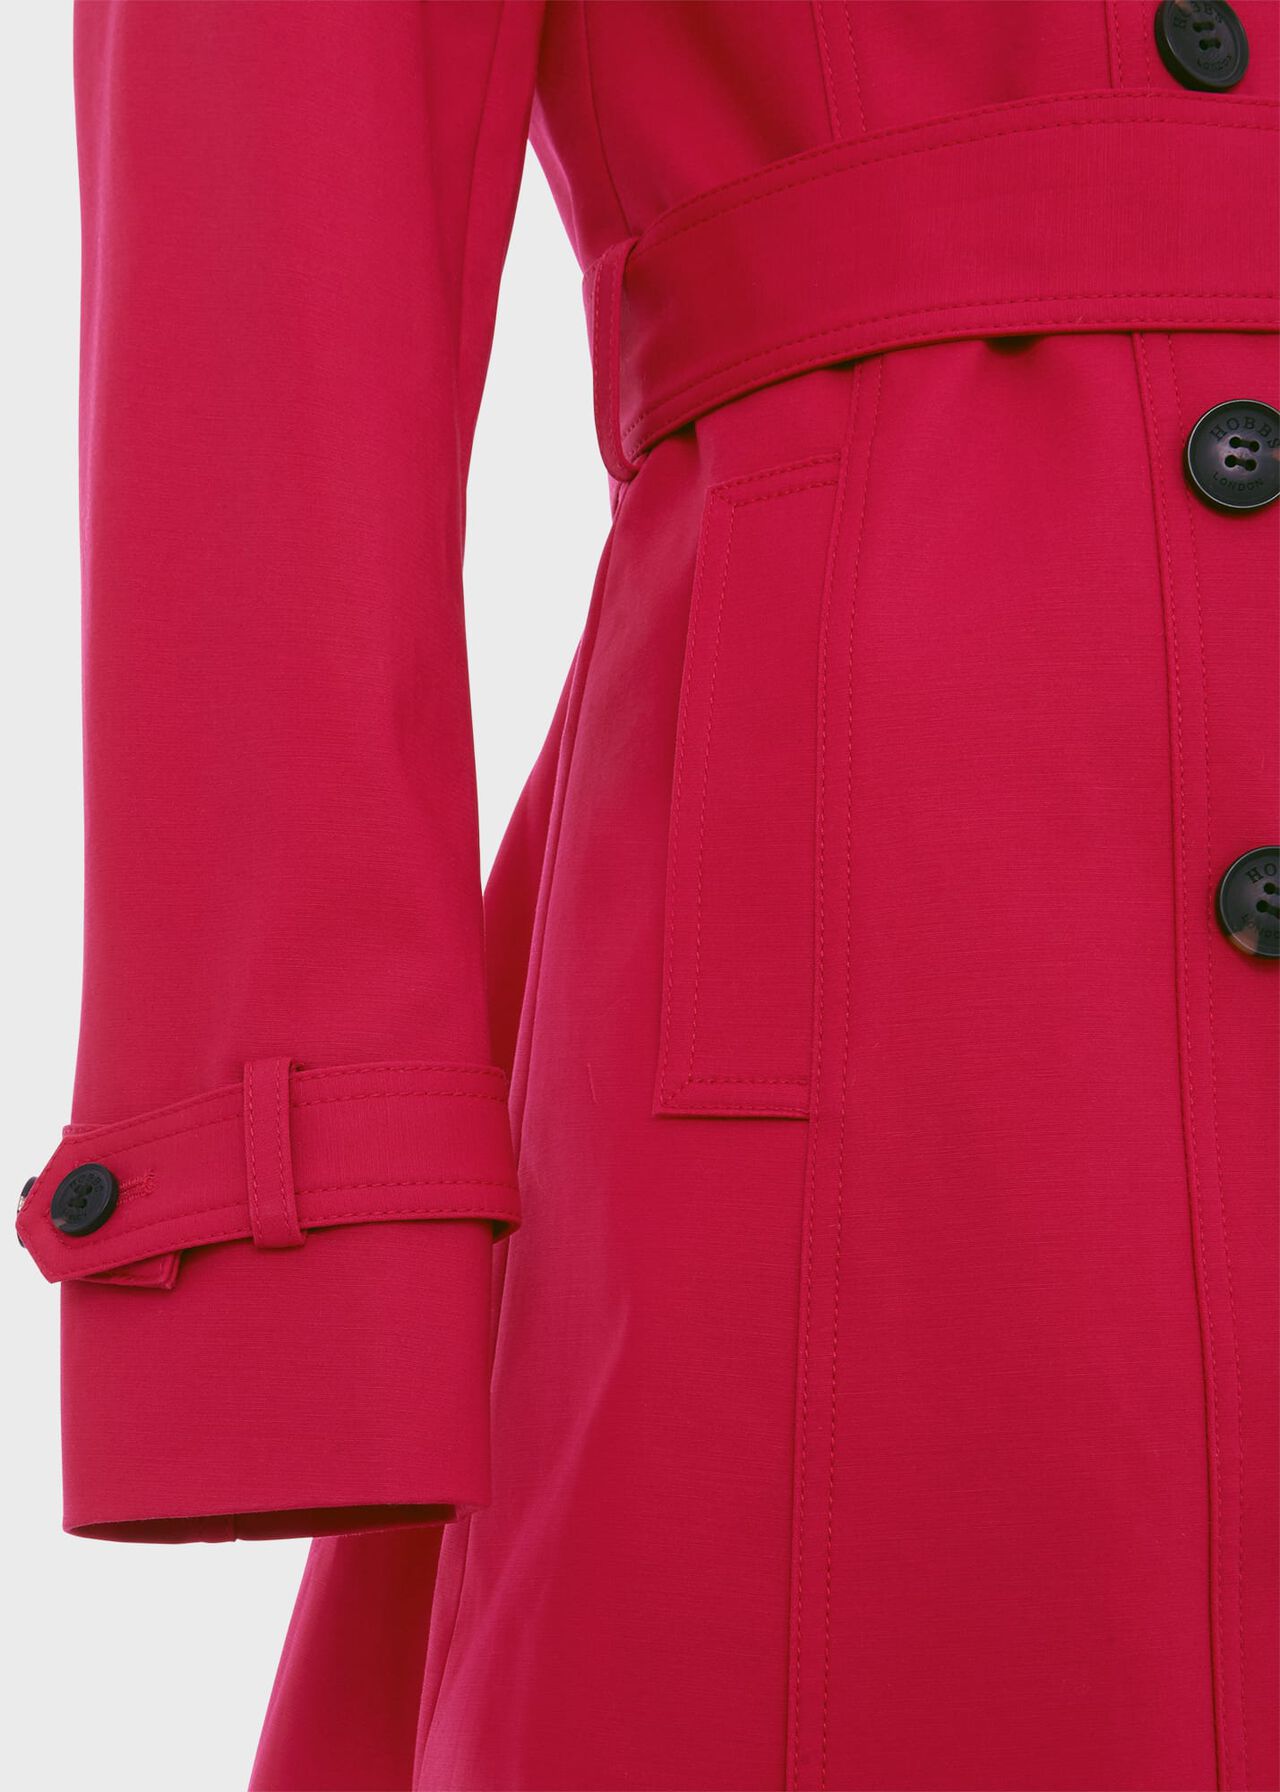 Saskia Shower Resistant Trench Coat, Cerise Pink, hi-res